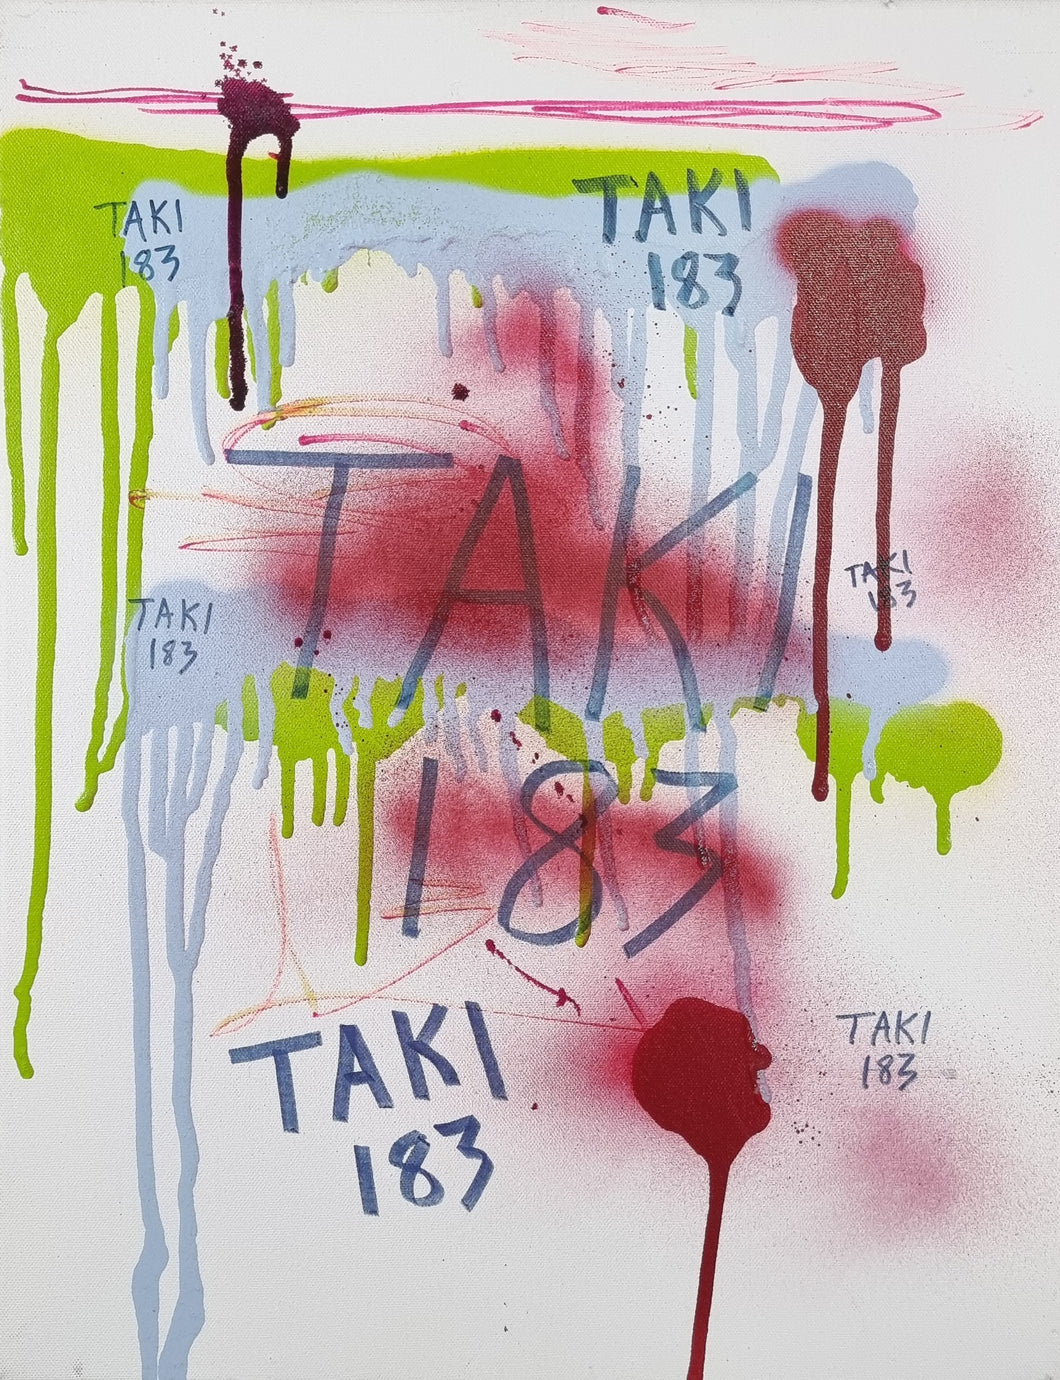 TAKI 183 Untitled - Painting on canvas